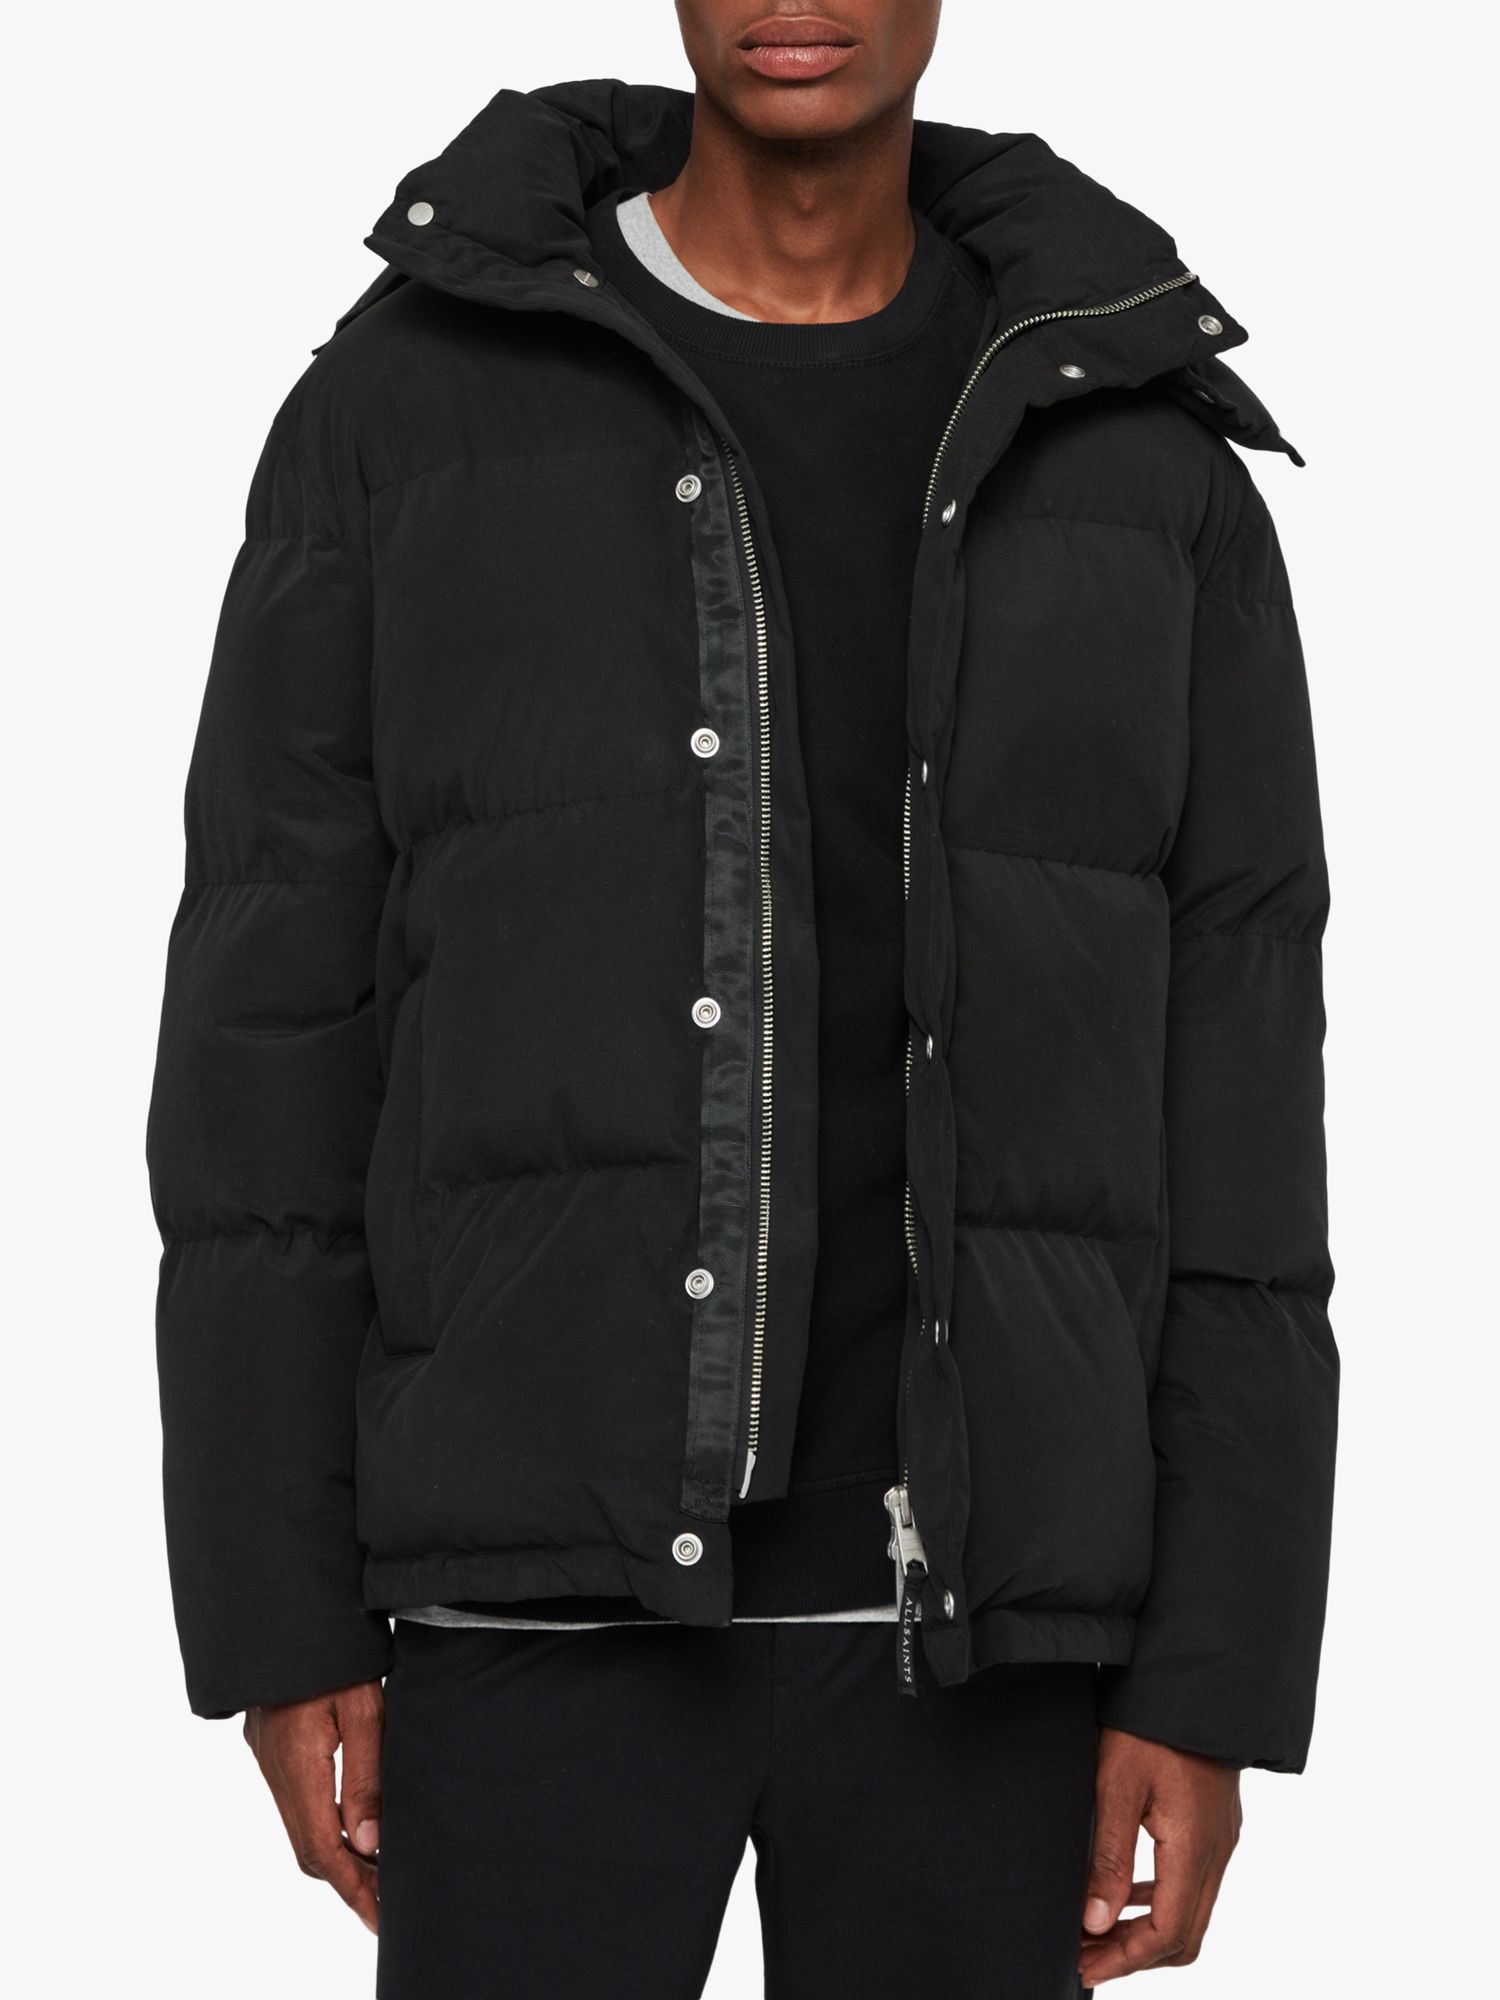 AllSaints Edbury Puffer Jacket, Black at John Lewis & Partners